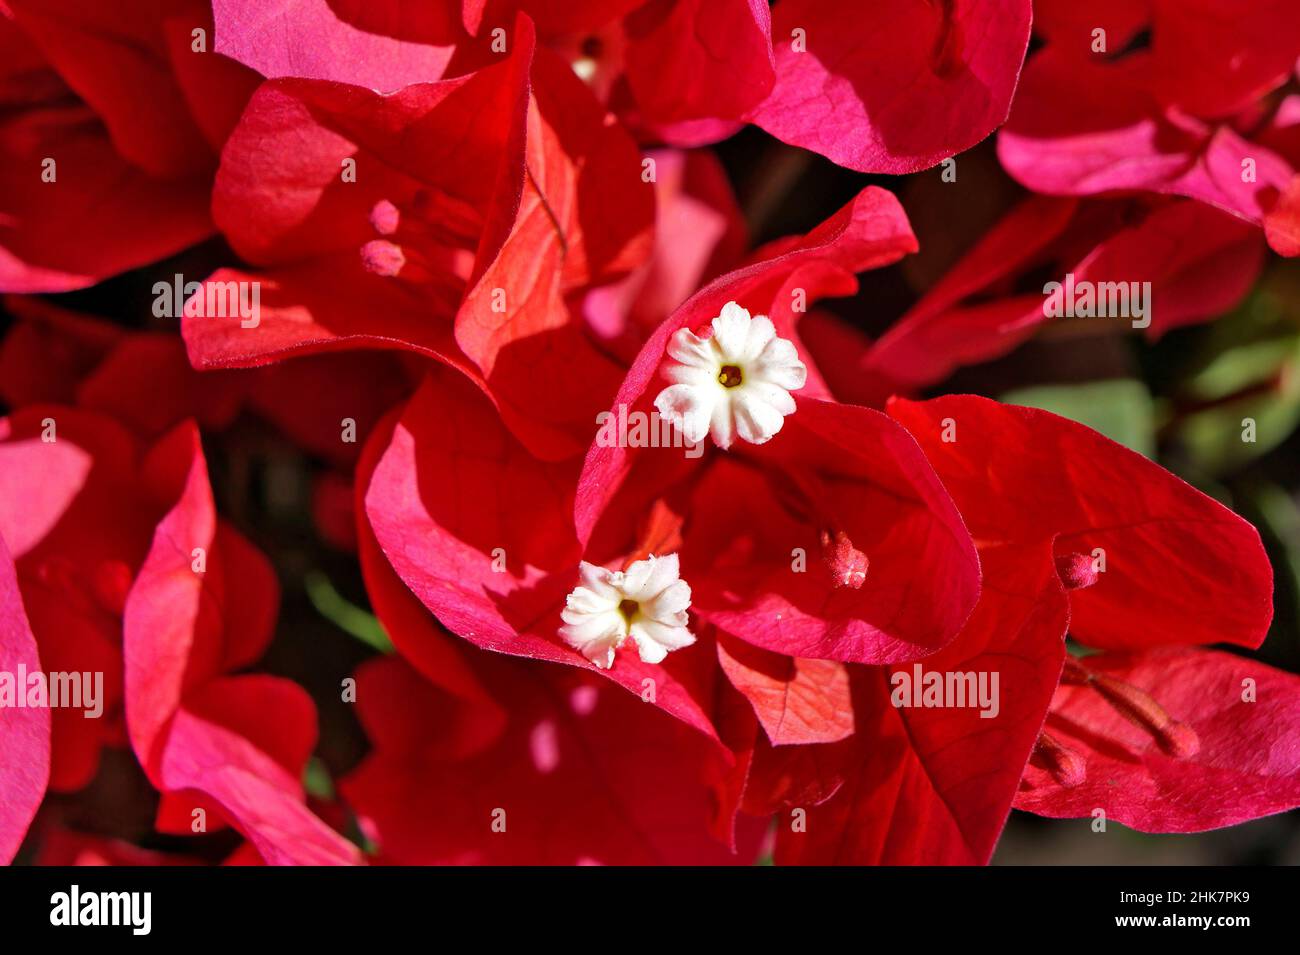 Pink bougainvillea flowers (Bougainvillea glabra) Stock Photo